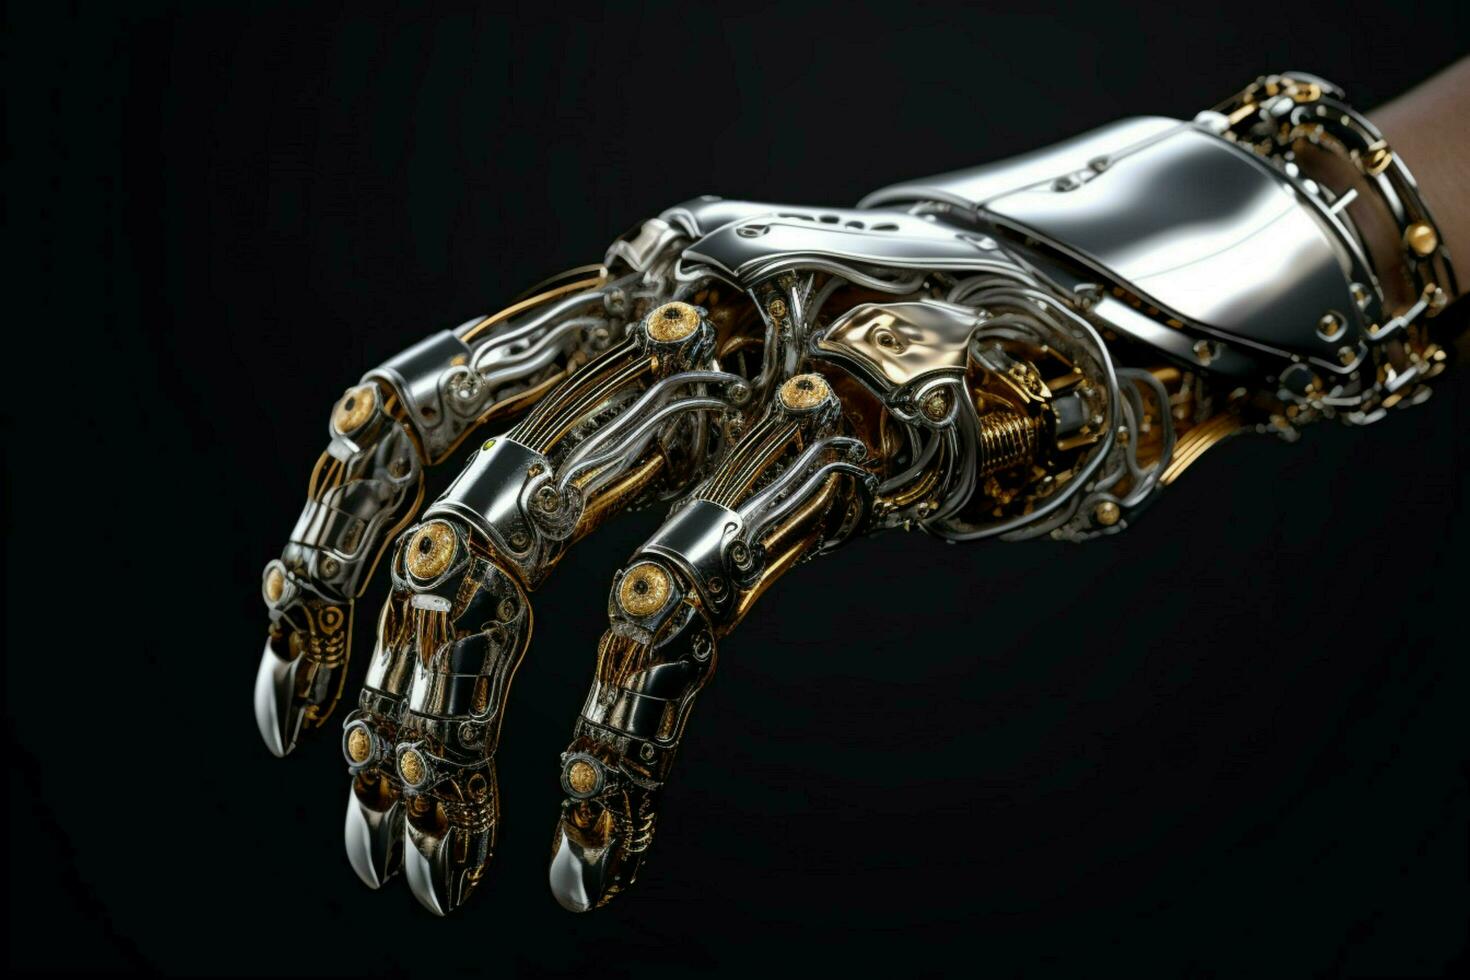 metallic cyborg hand showcases futuristic robotic photo